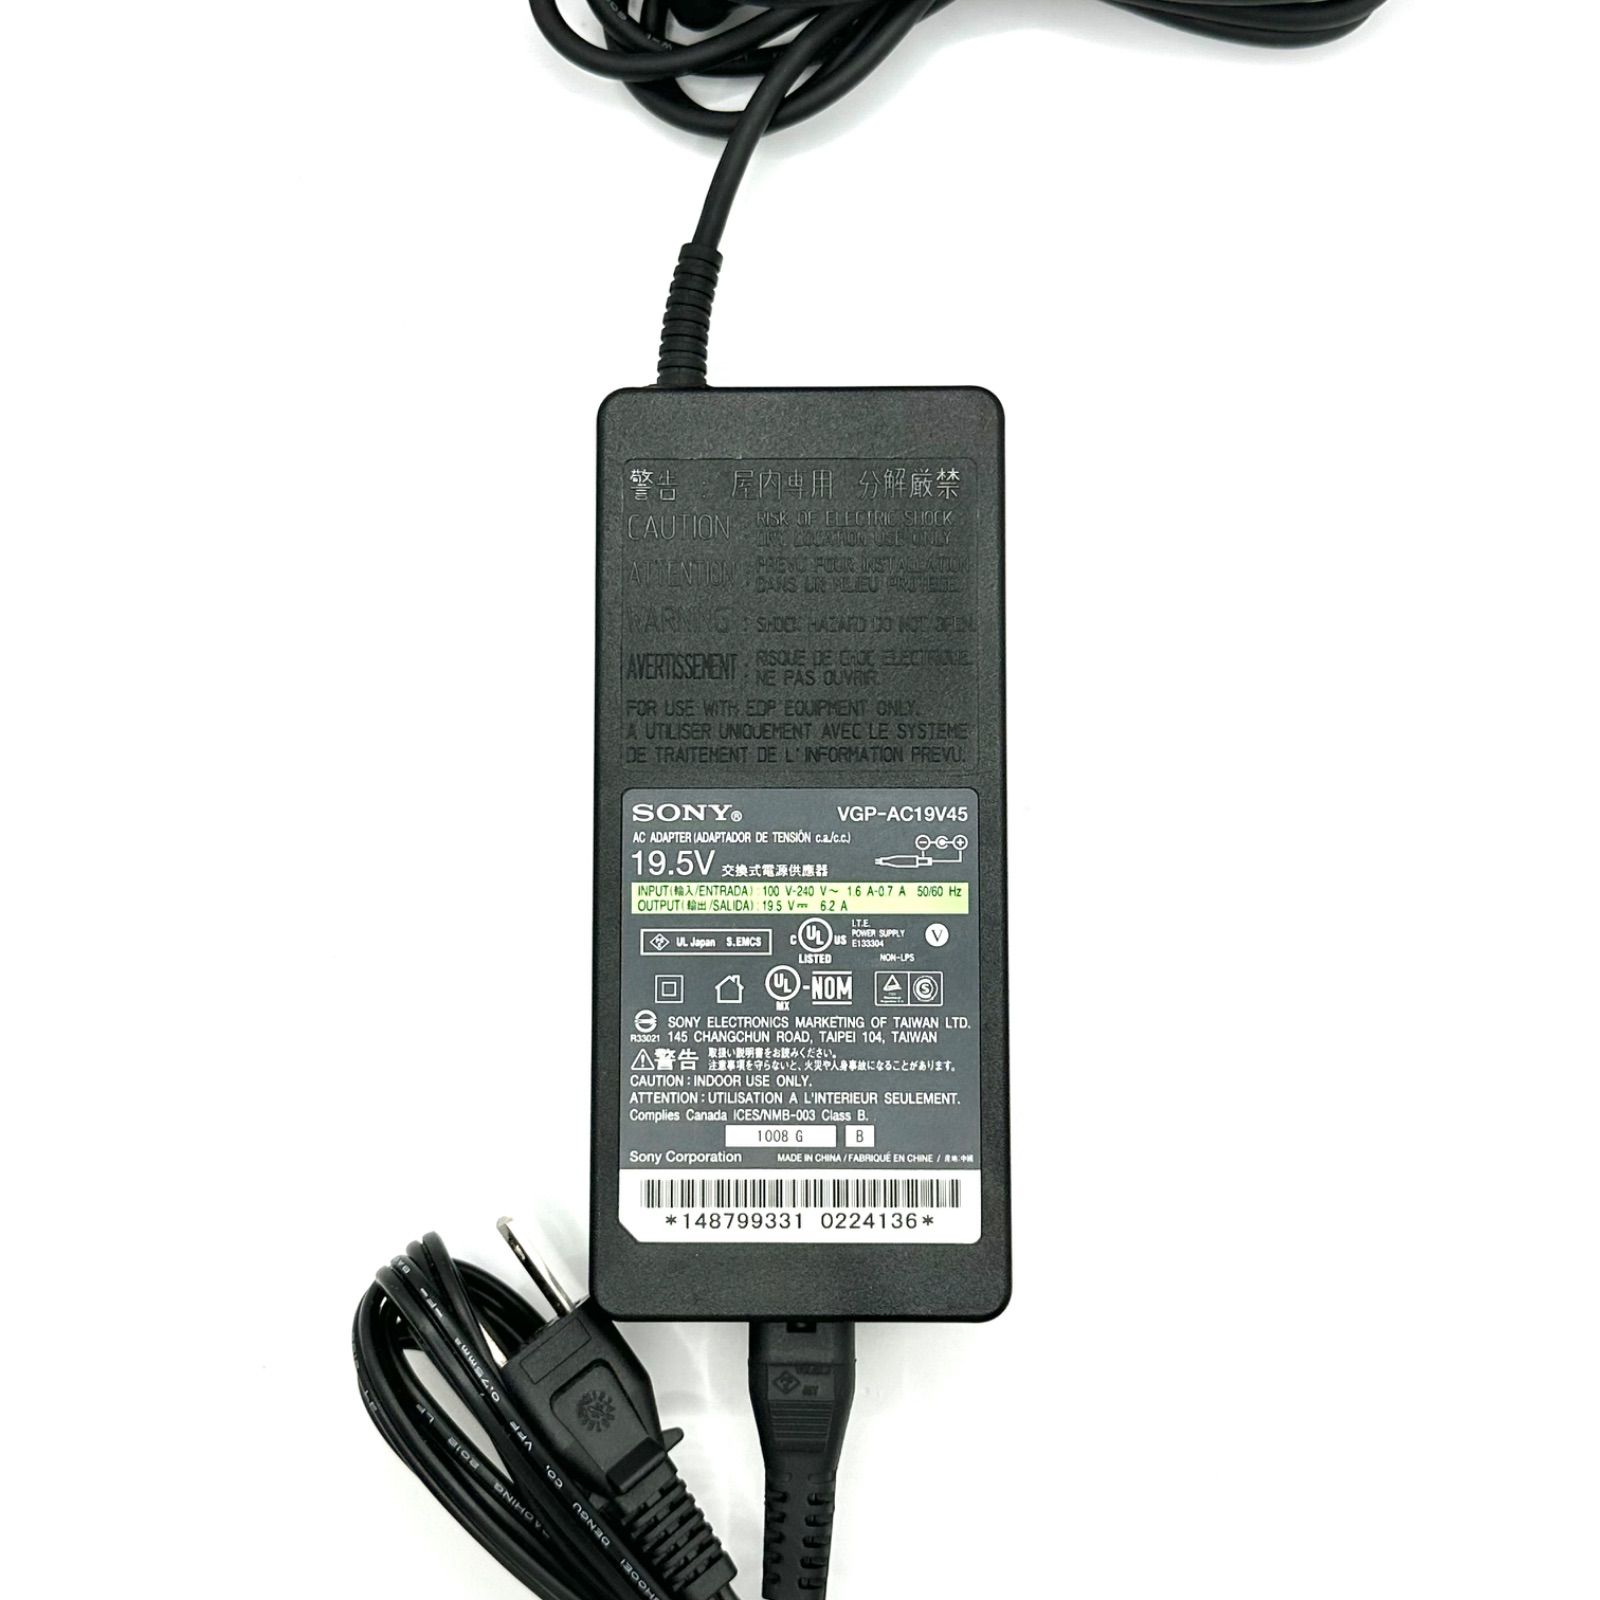 SONY VGP-AC19V45 ソニー 純正 バイオ VAIO ヴァイオ パソコン PC Jシリーズ ノートパソコン ACアダプタ 充電器  チャージャー 充電ケーブル 充電 電源アダプター 電源コード 1004-1125 きりん メルカリ